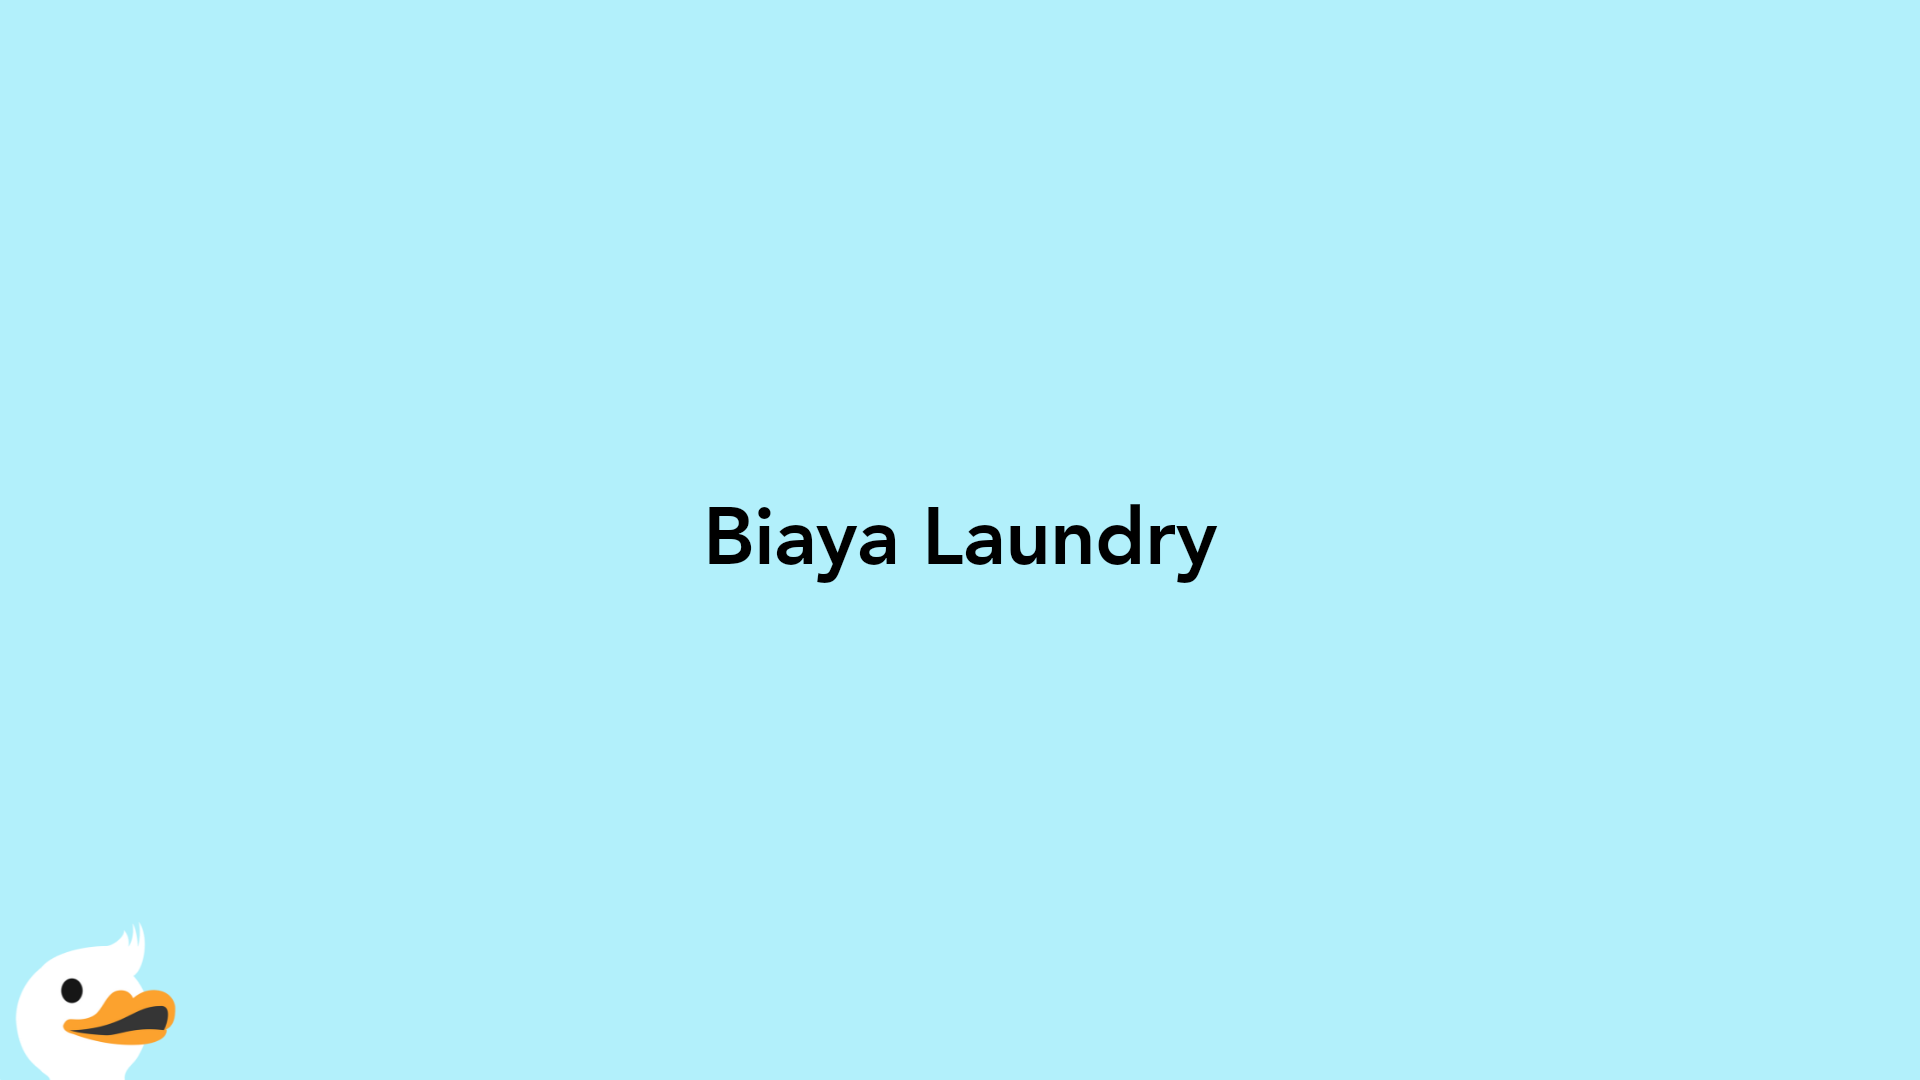 Biaya Laundry